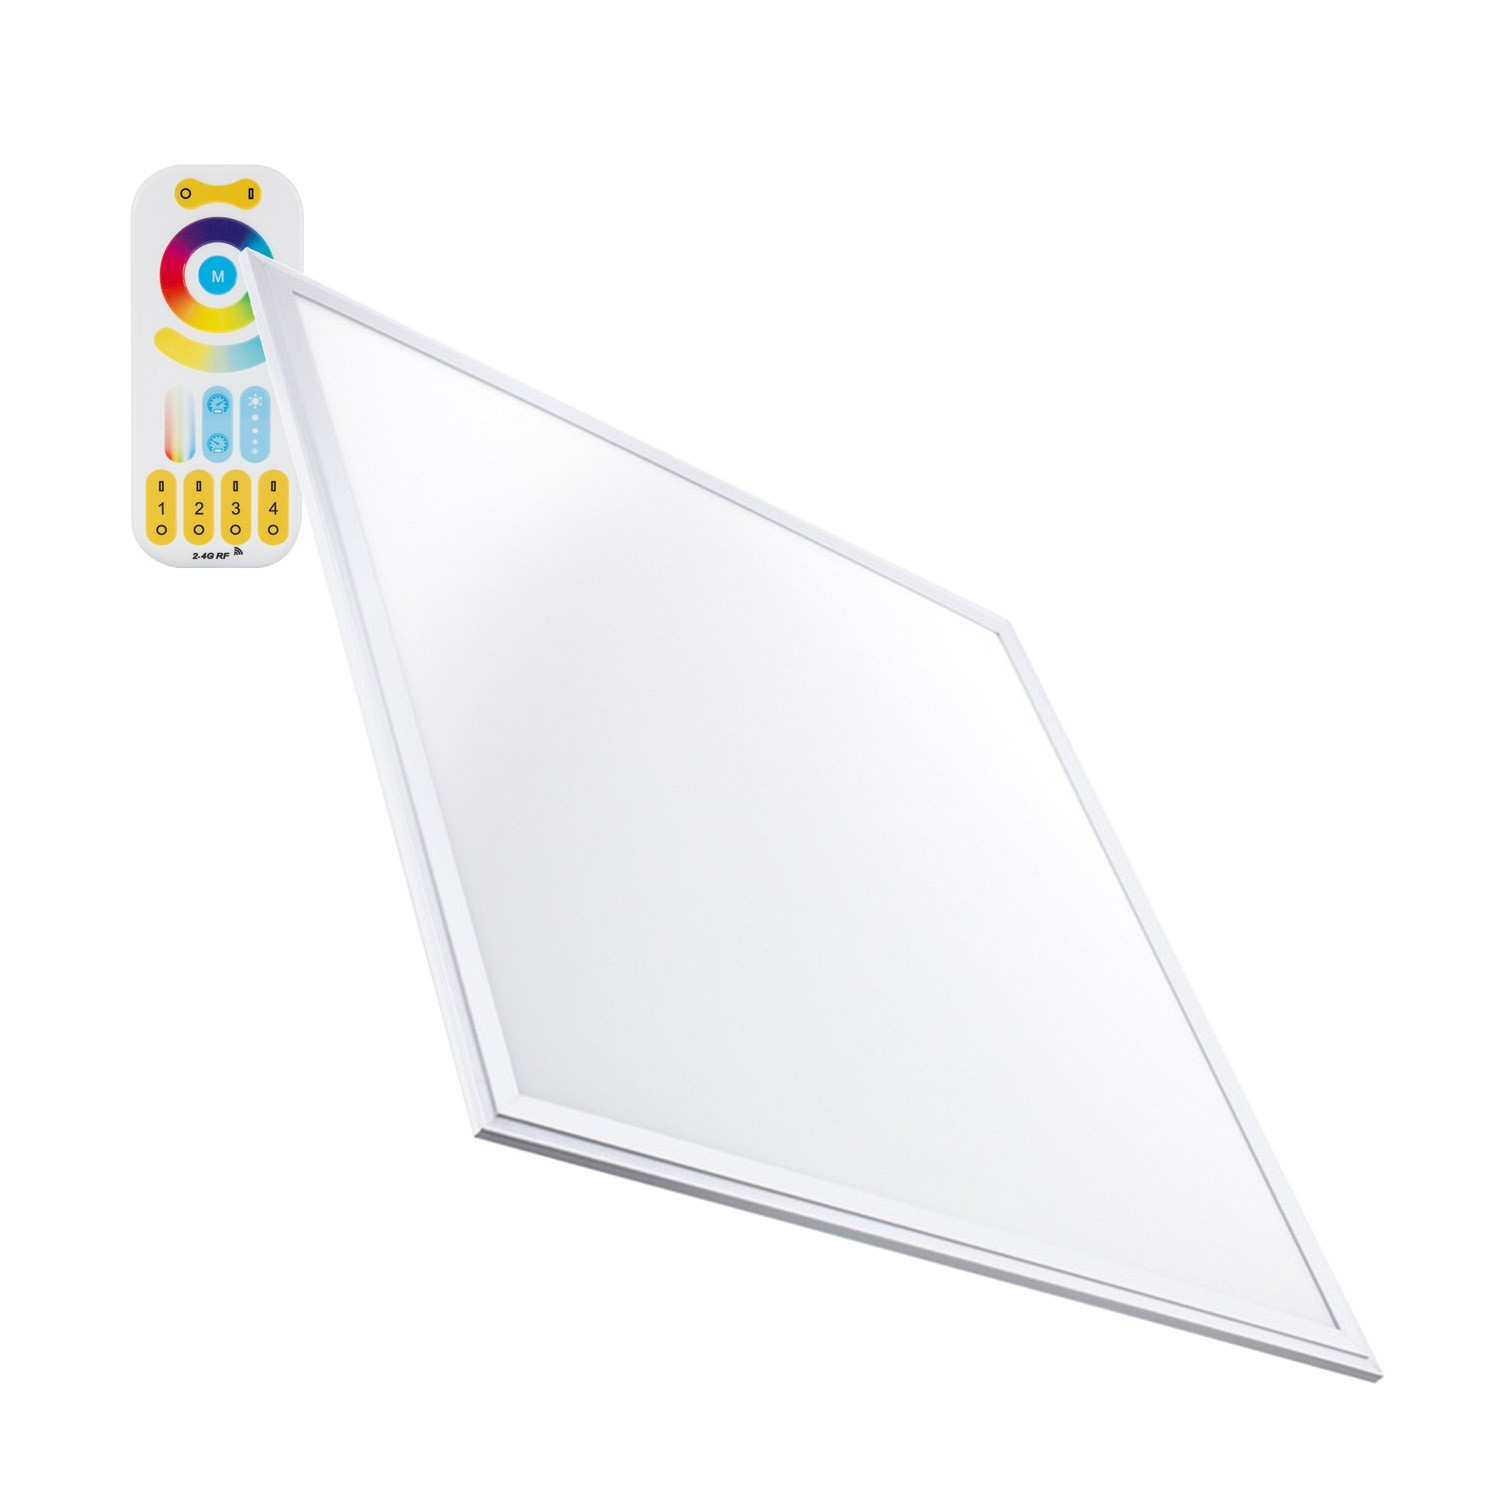 LEDKIA Lighting 40W 60x60cm Slim LED Panel 3600lm LIFUD Surface Kit Daylight 4000K 4500K